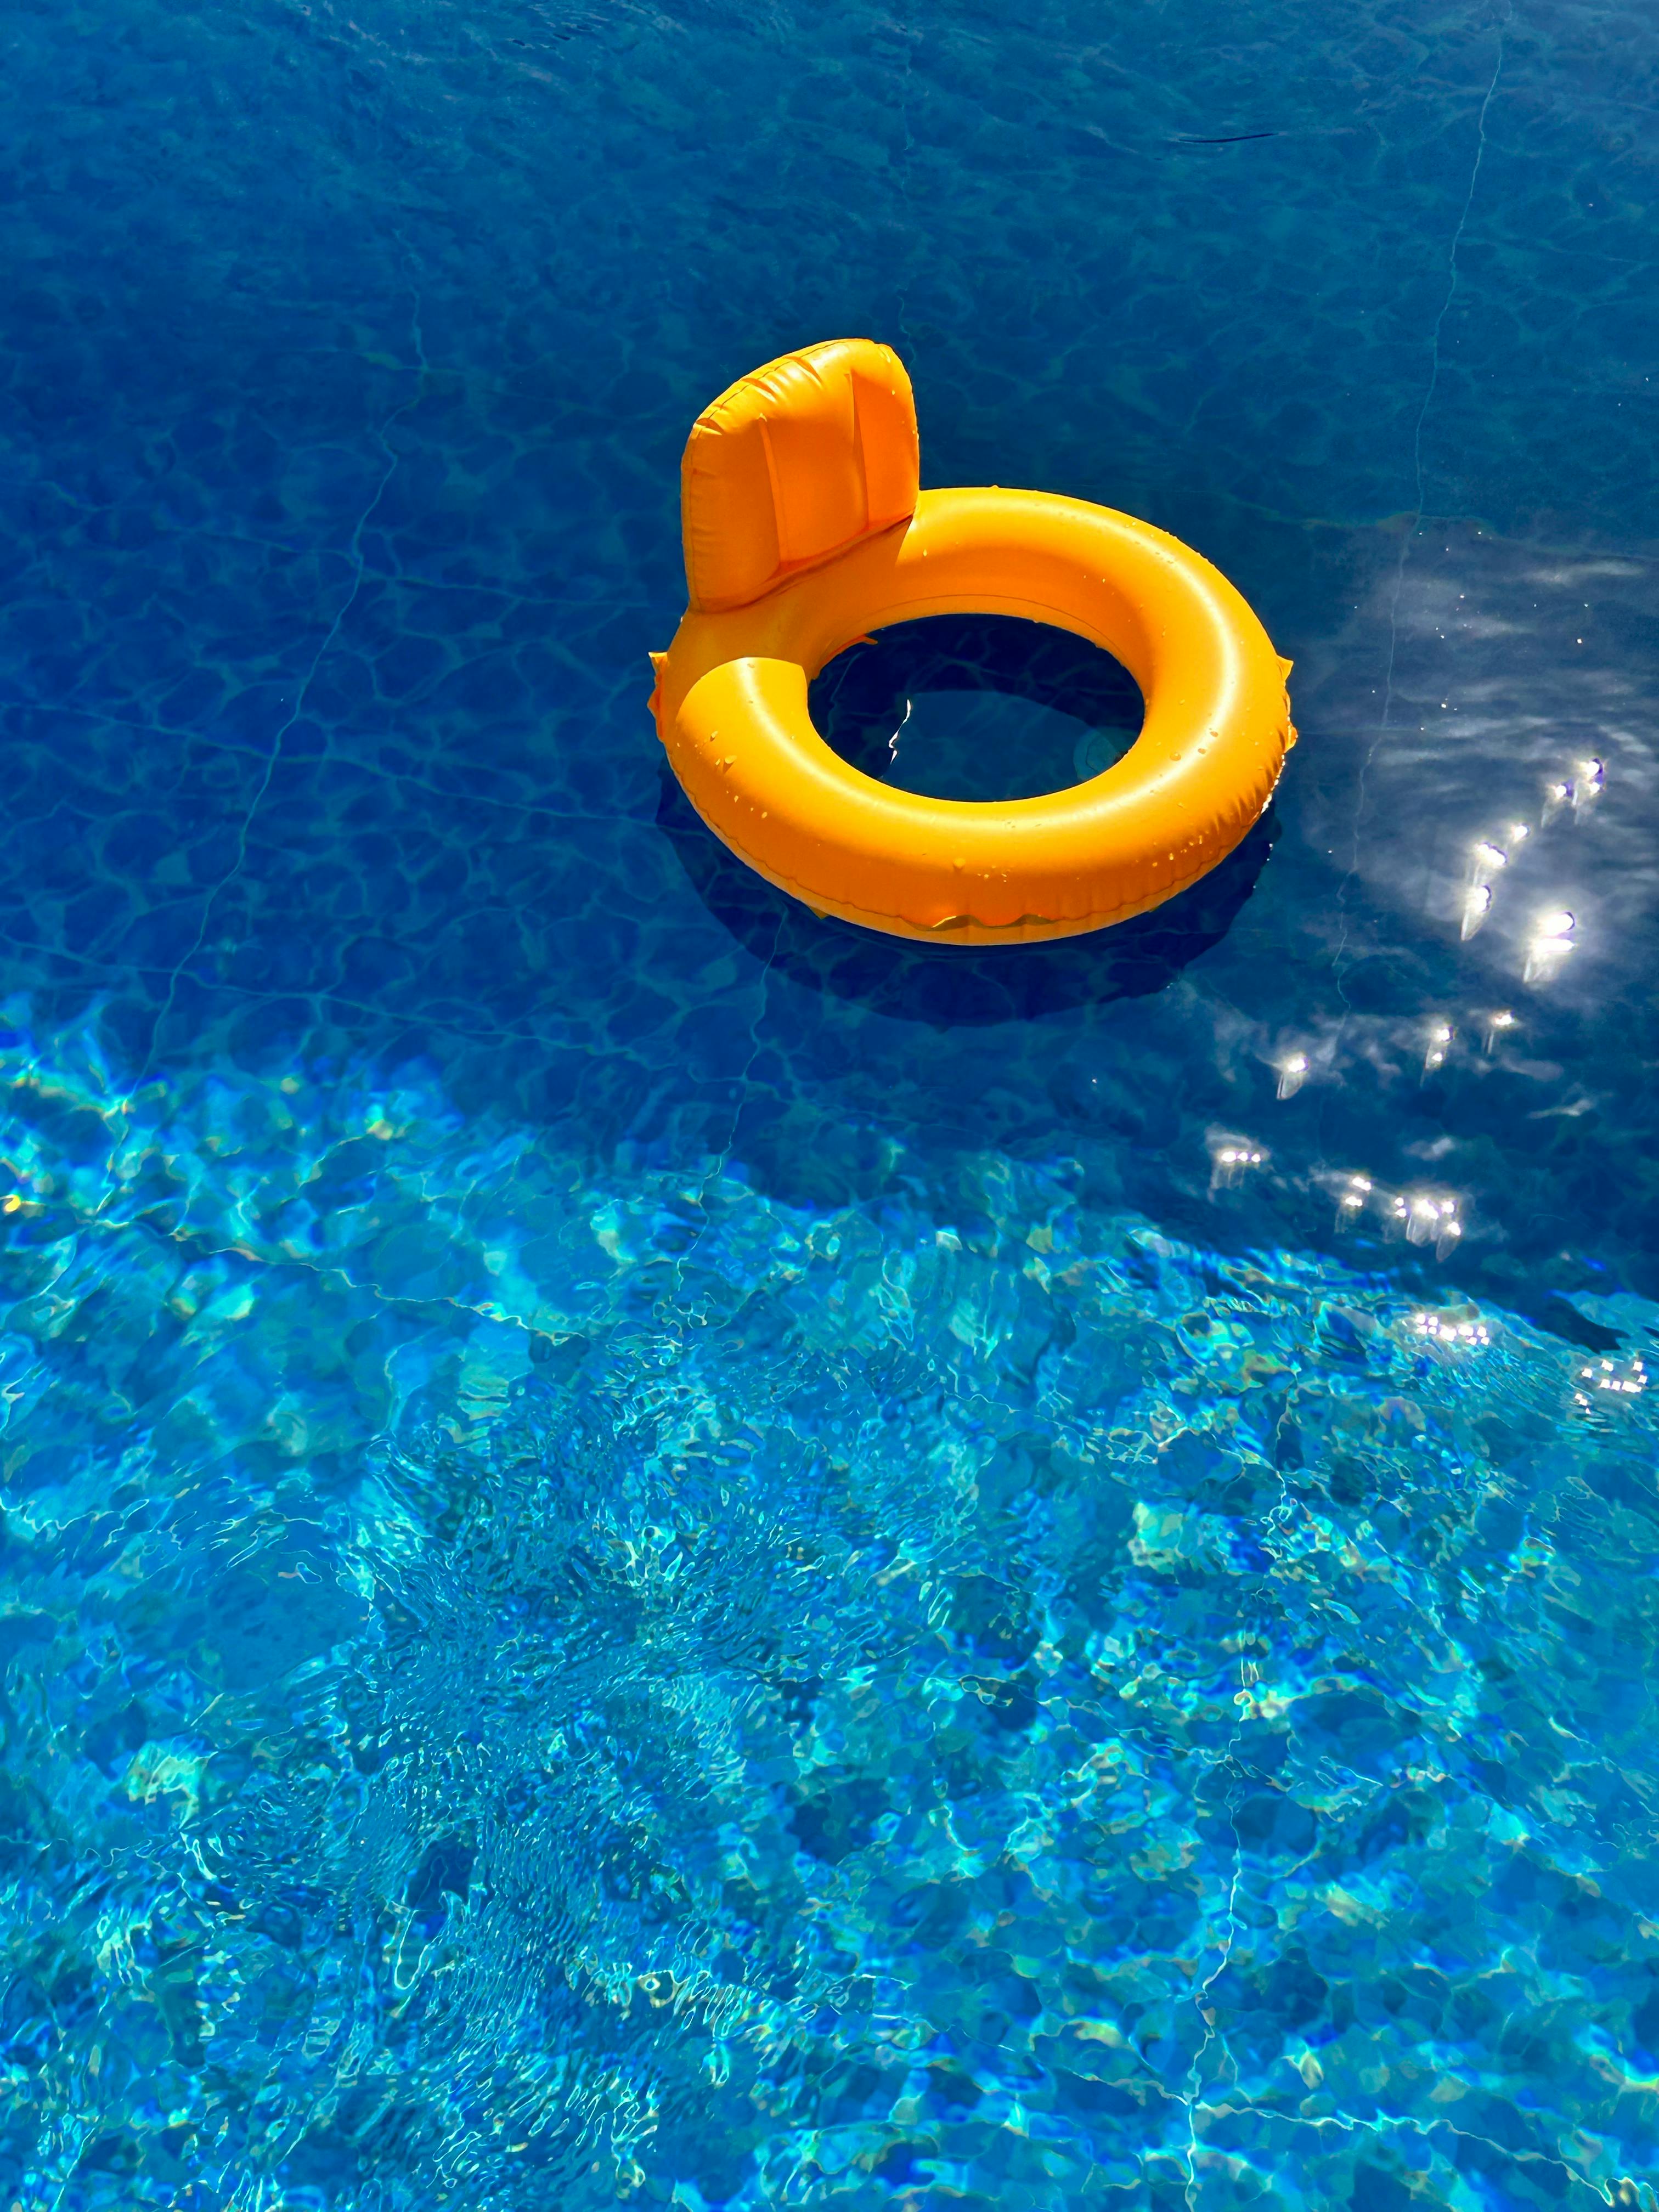 Swim Ring in a Swimming Pool Stock Image - Image of circle, aqueous: 6302555